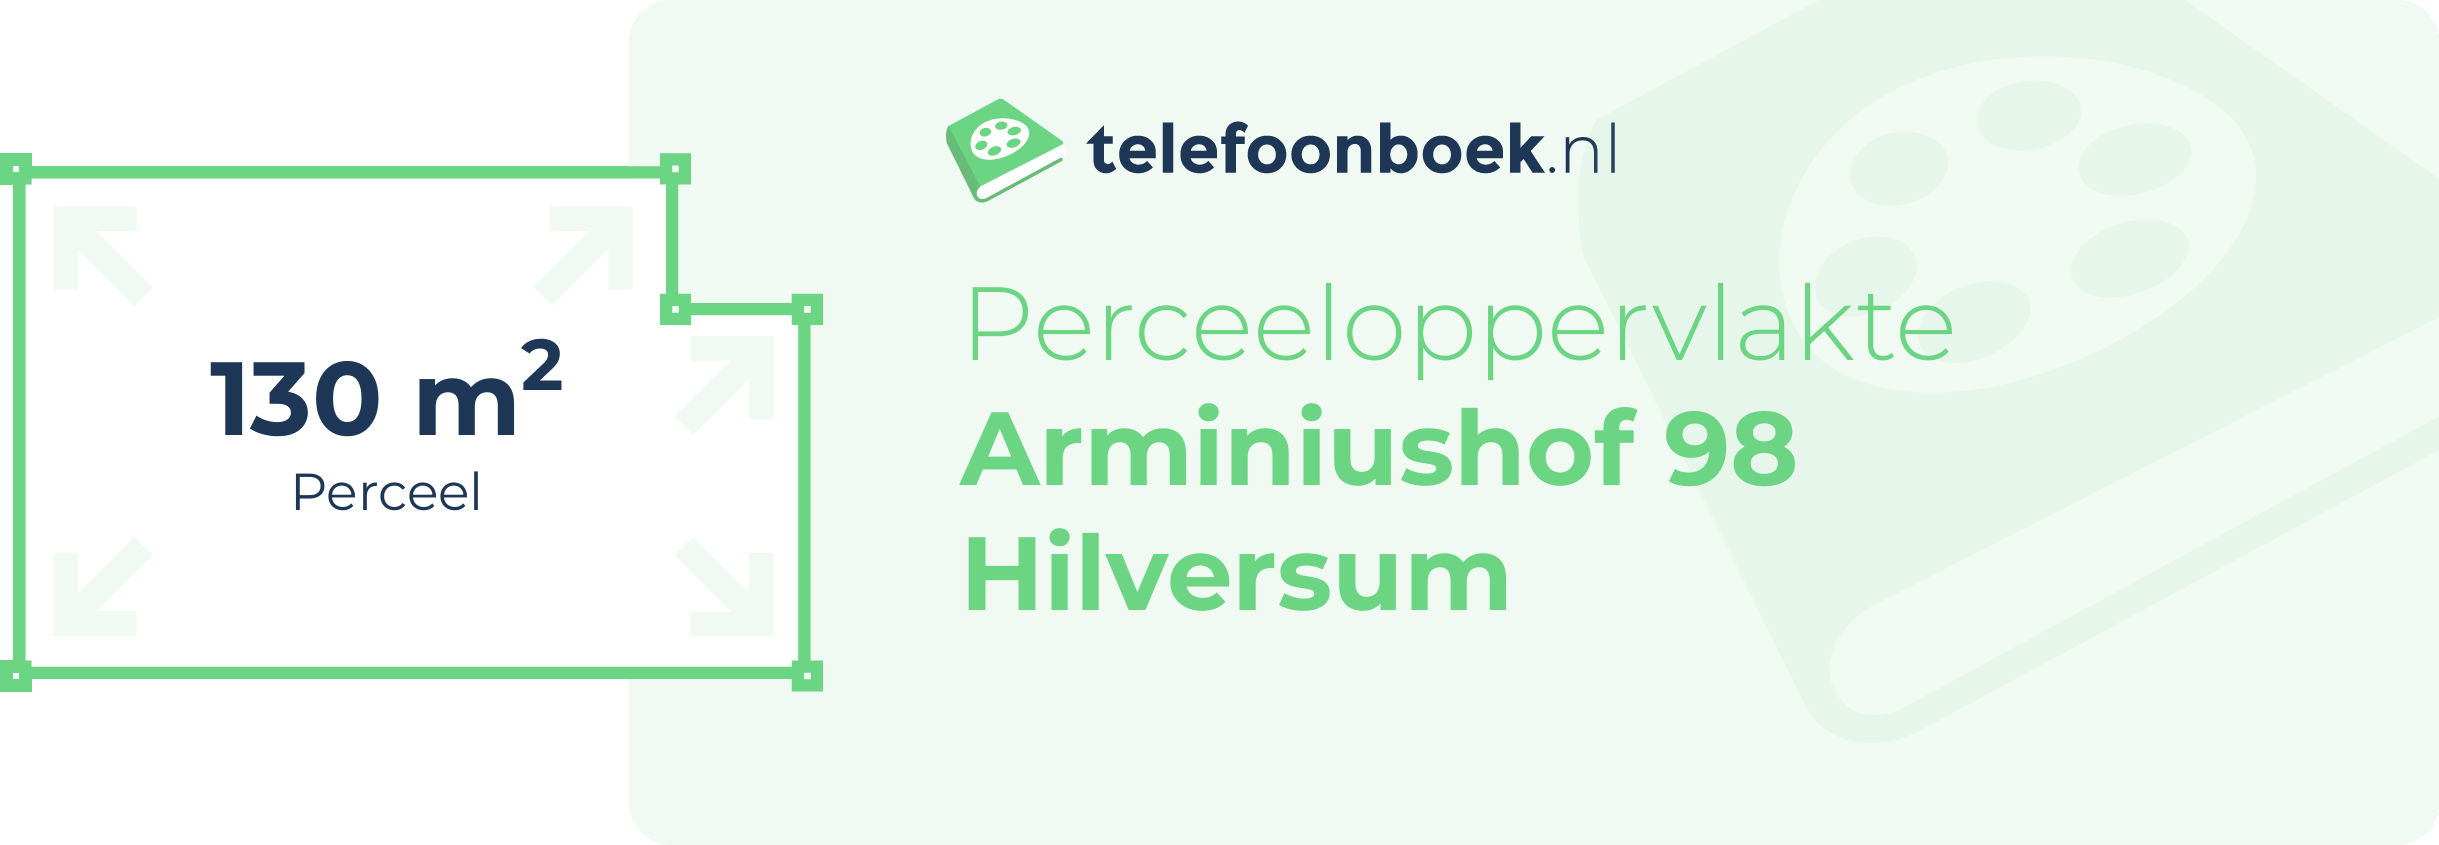 Perceeloppervlakte Arminiushof 98 Hilversum